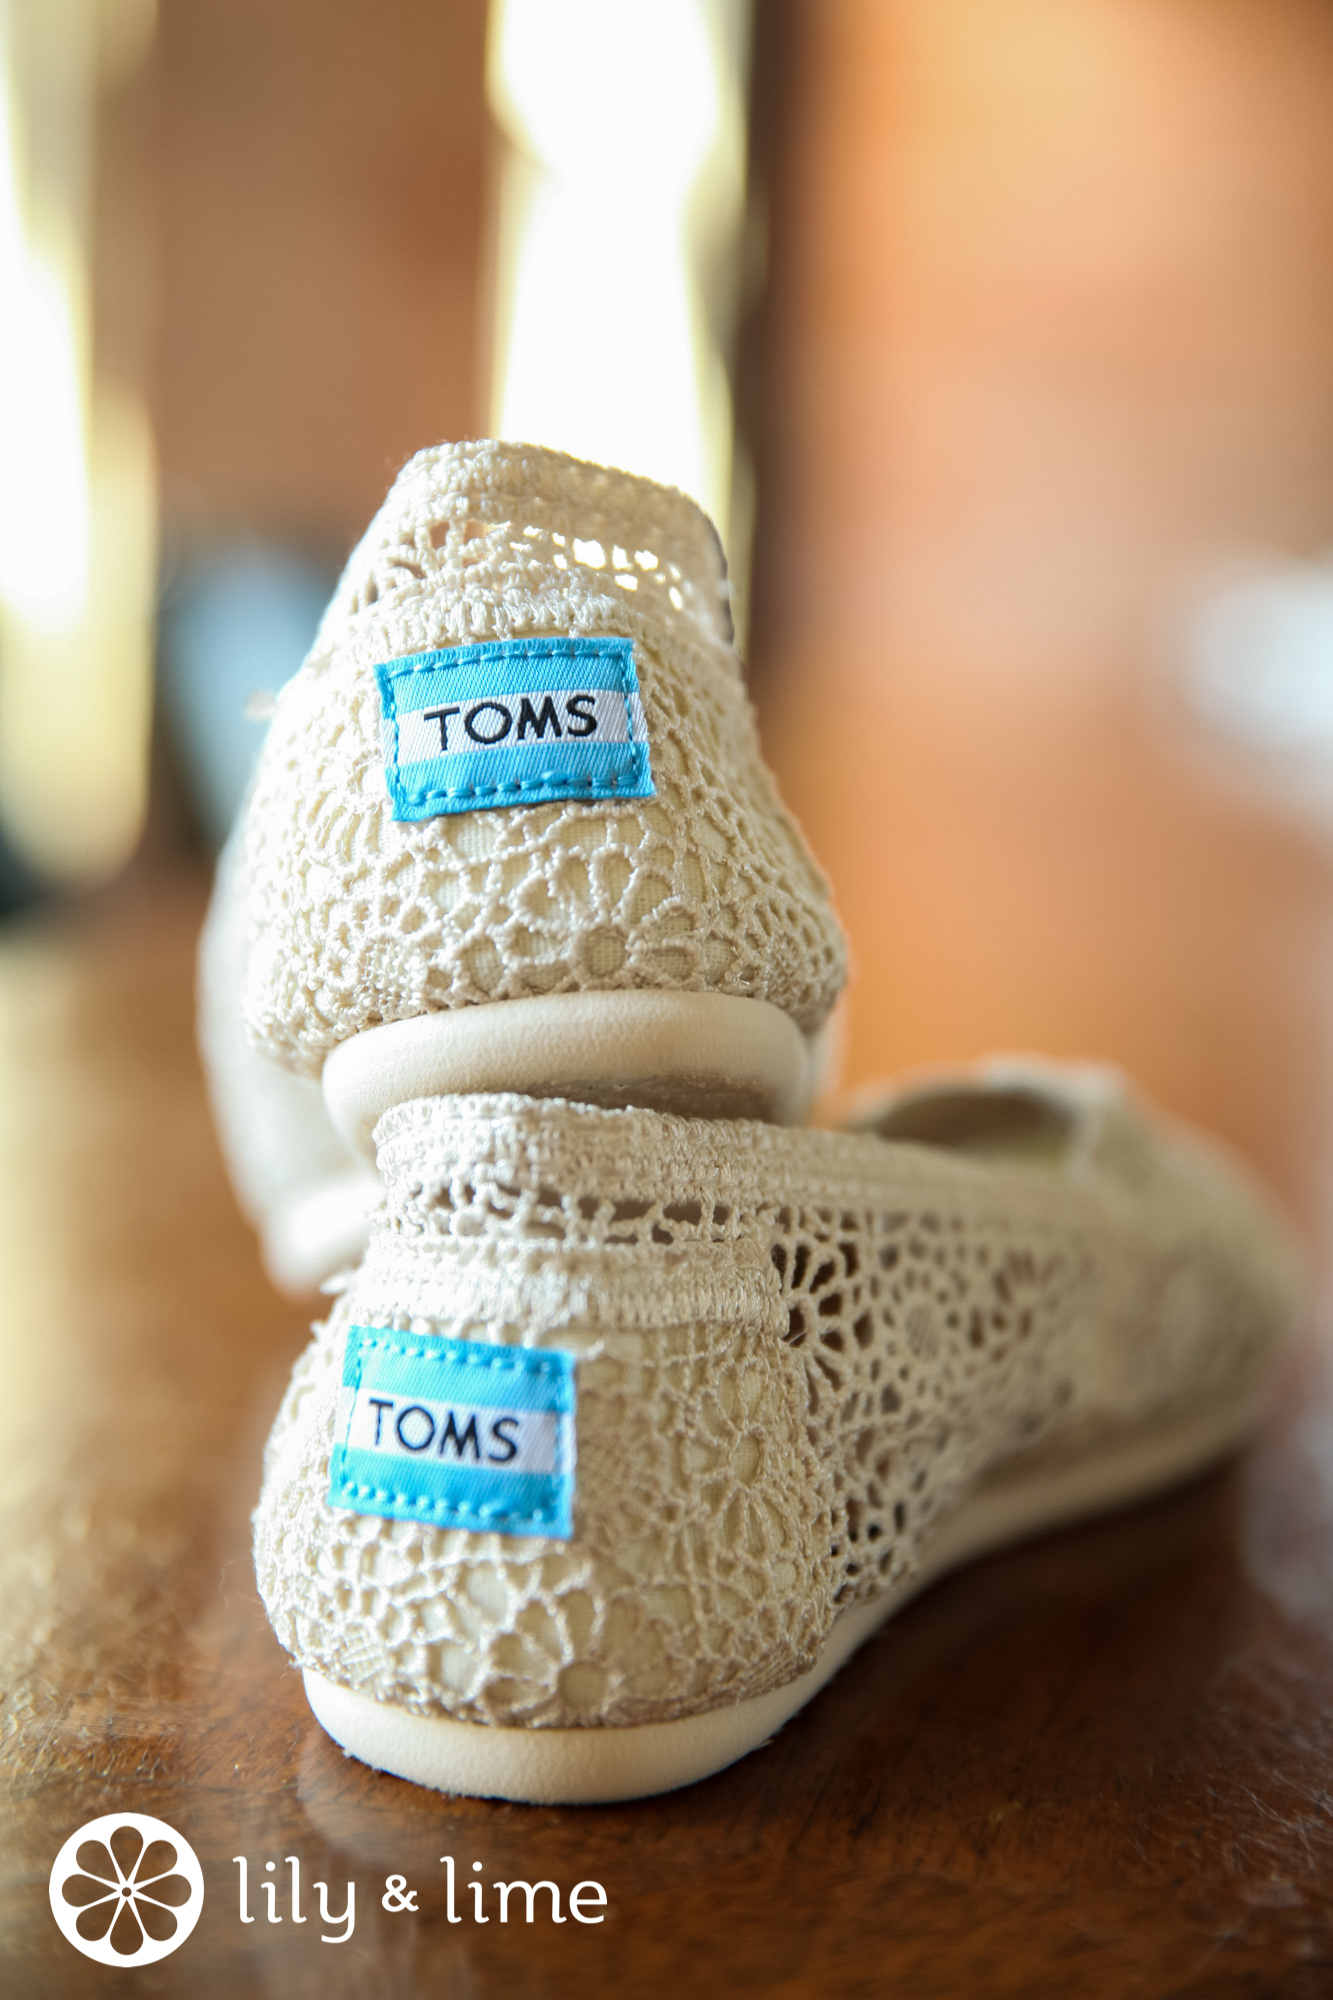 Tom's wedding shoes